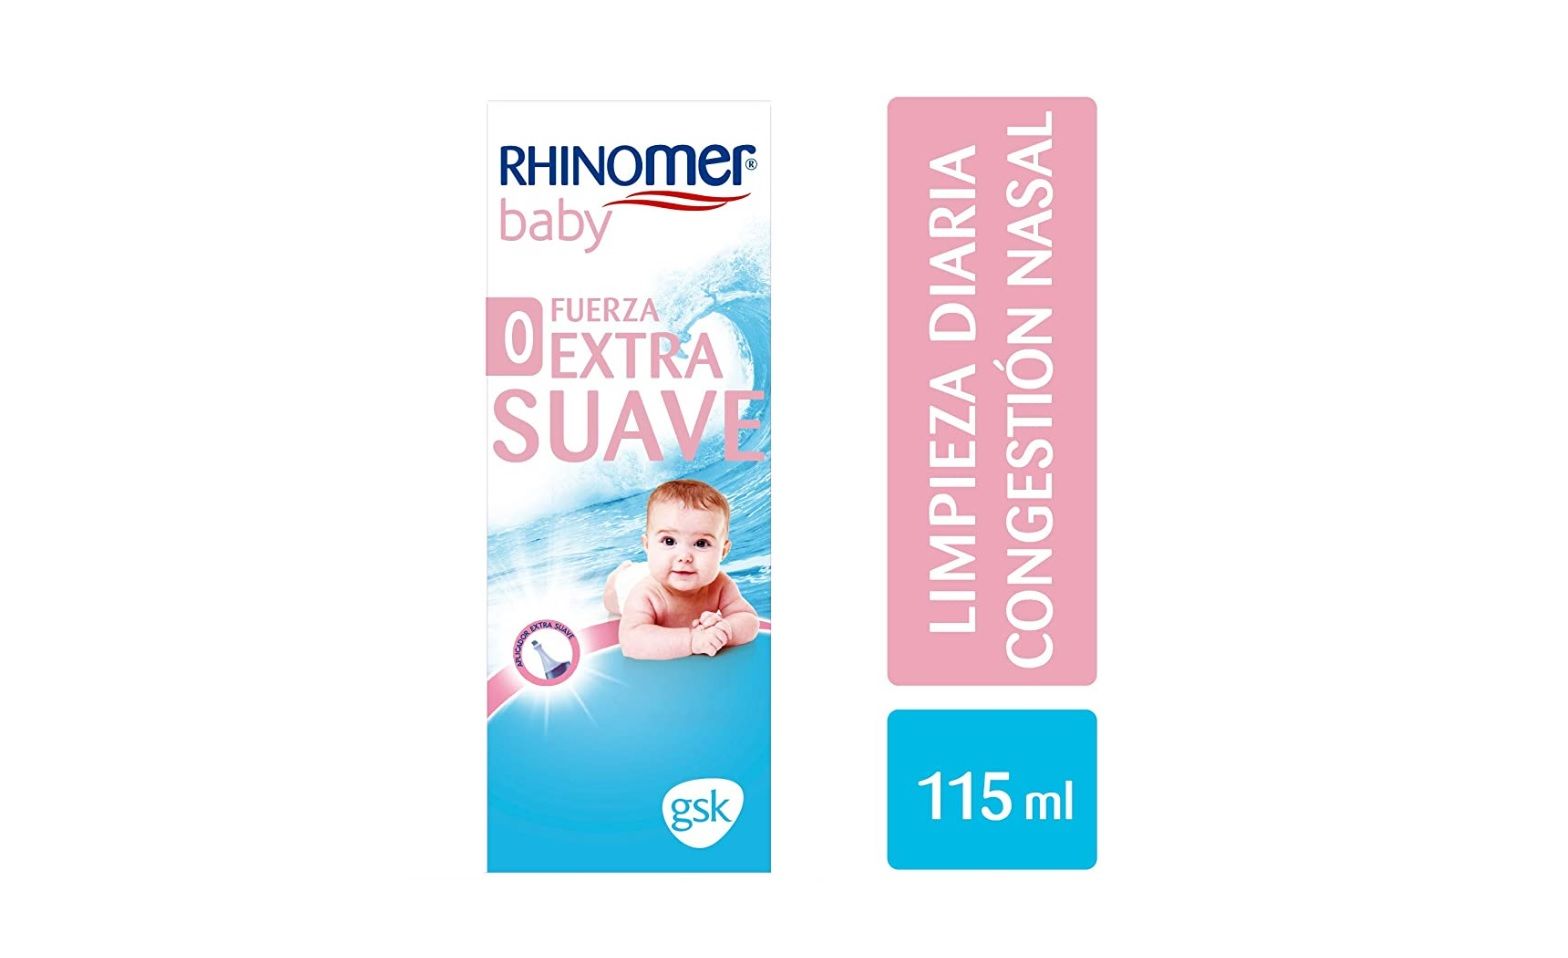 ¡Chollo! Rhinomer Baby Spray nasal por sólo 5,94€ (antes 9,95€)